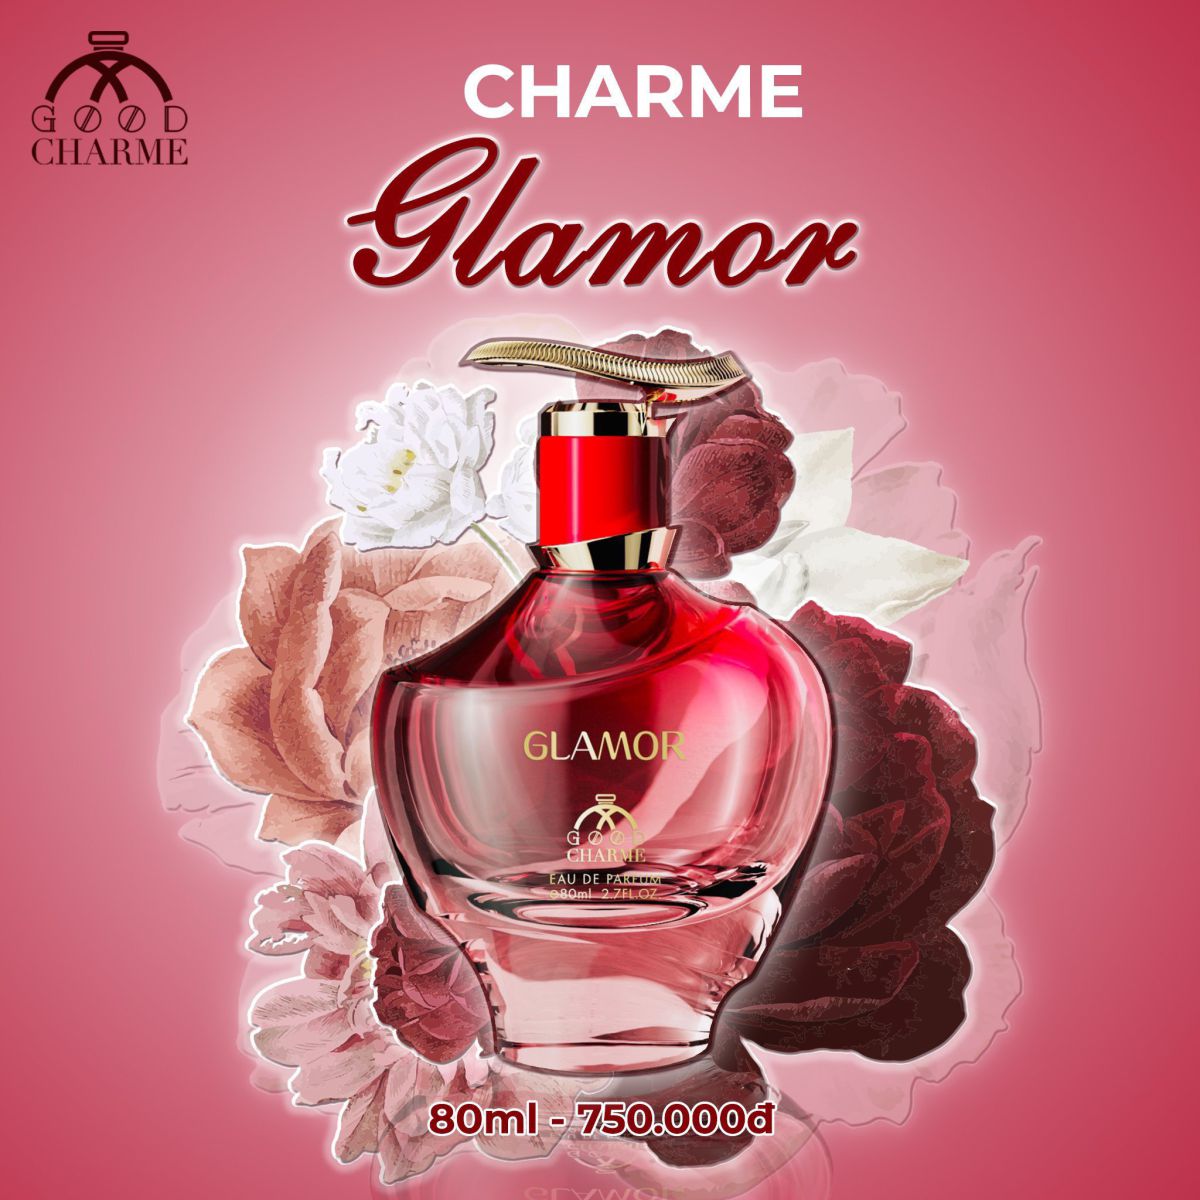 charme-glamor